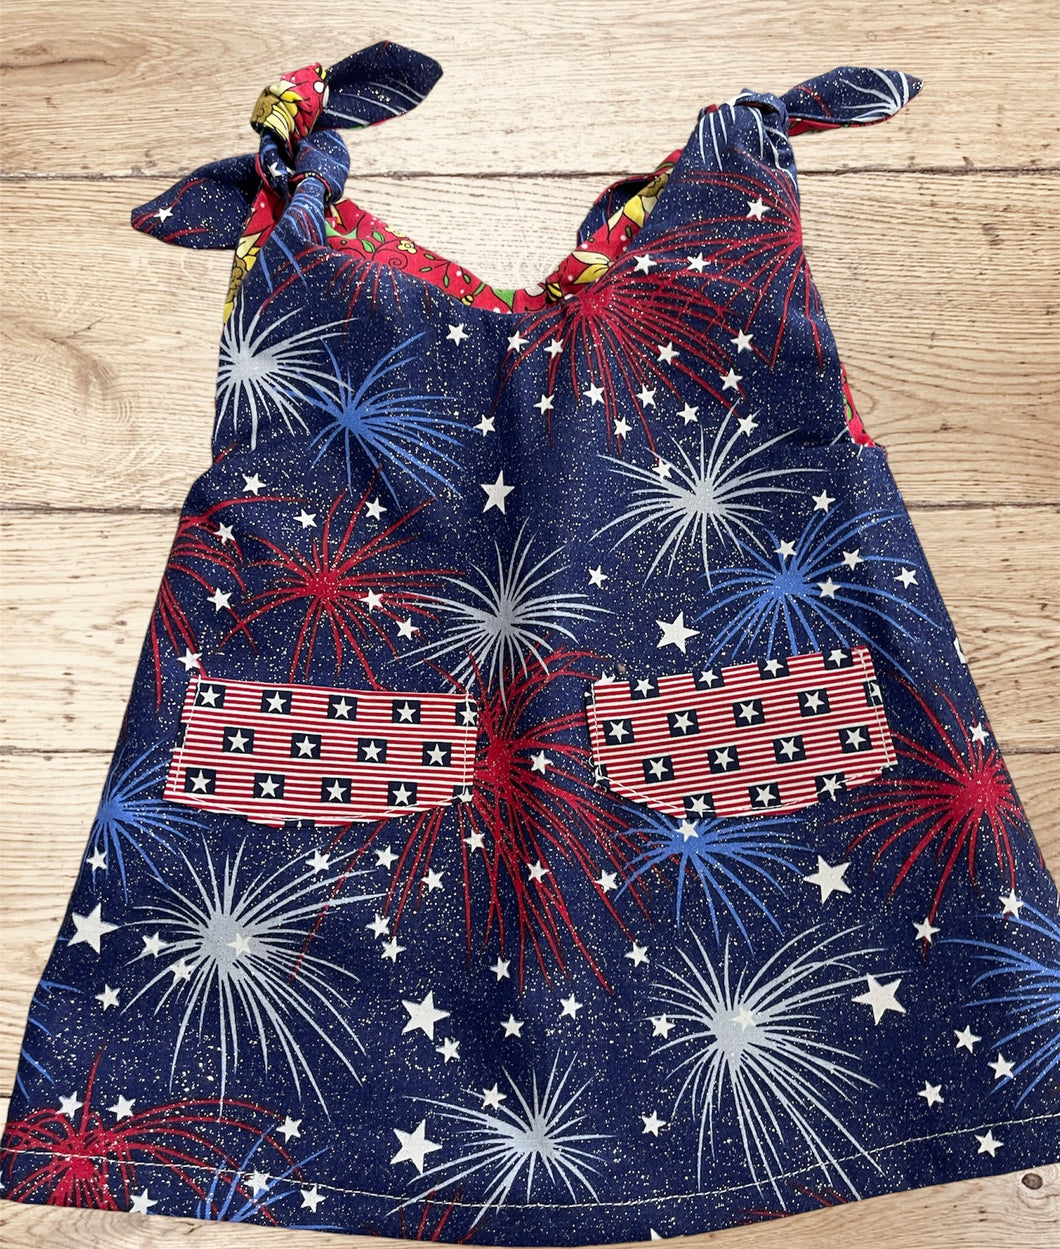 Janie Kelly Reversible Dresses Fireworks